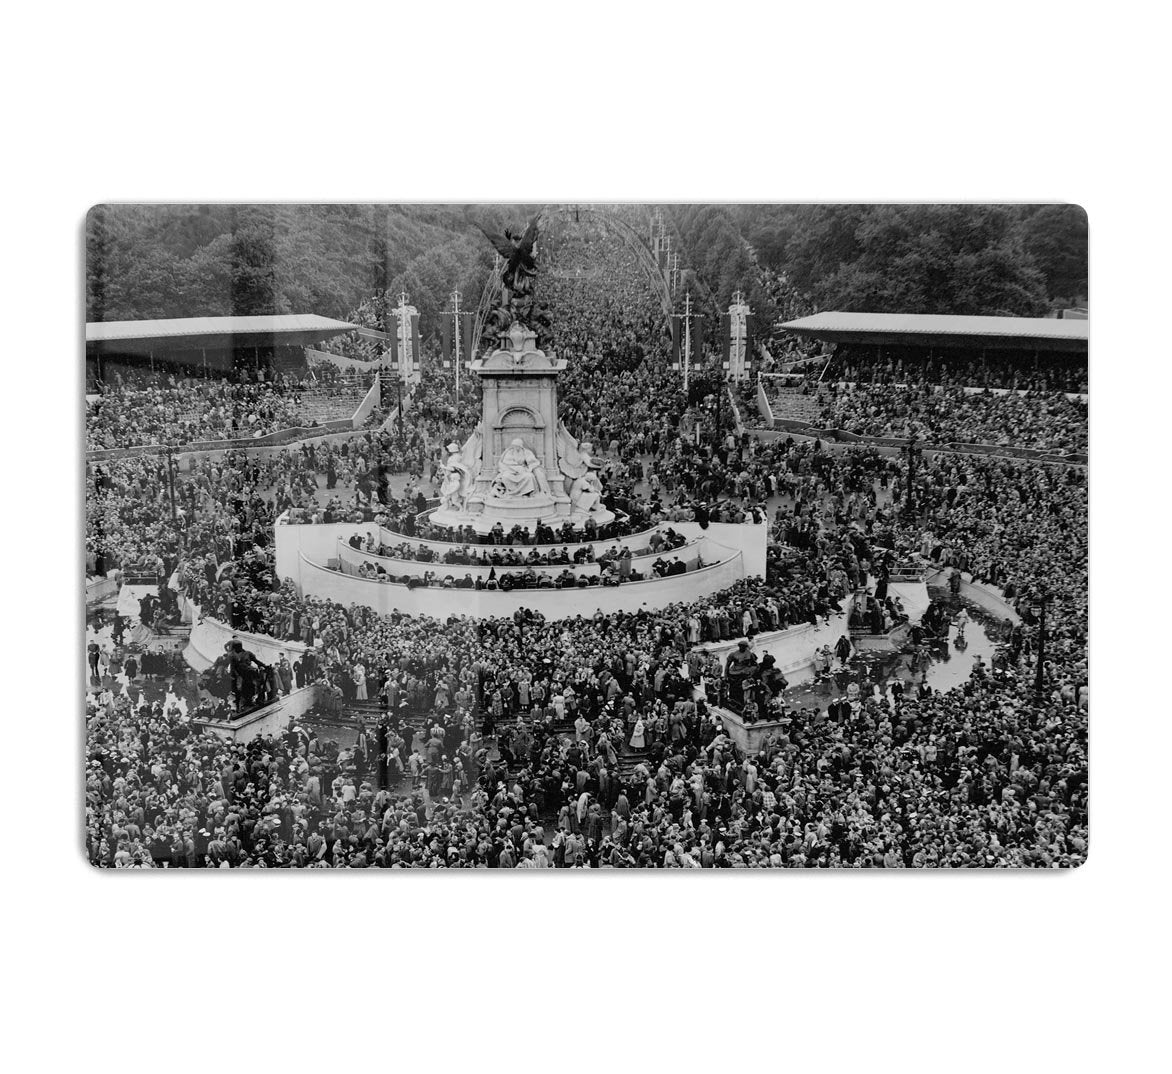 Queen Elizabeth II Coronation crowds at Buckingham Palace HD Metal Print